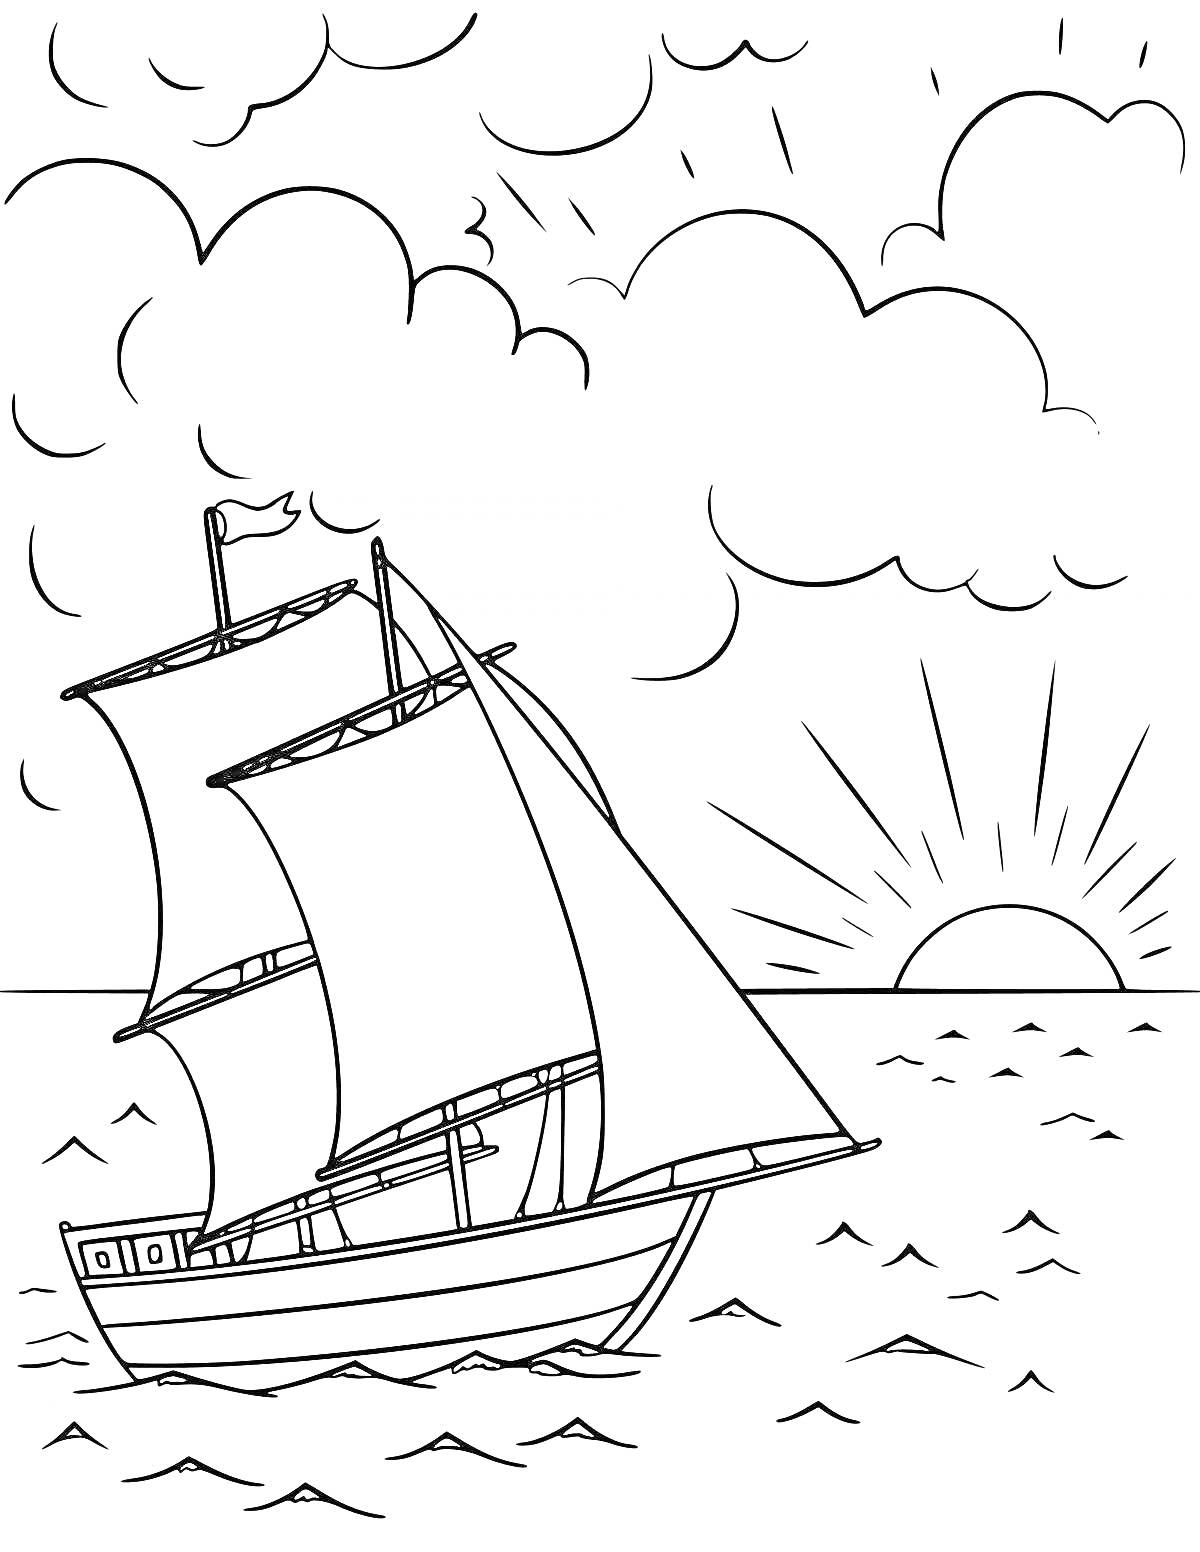 На раскраске изображено: Корабль, Море, Паруса, Солнце, Облака, Вода, Пейзаж, Закат